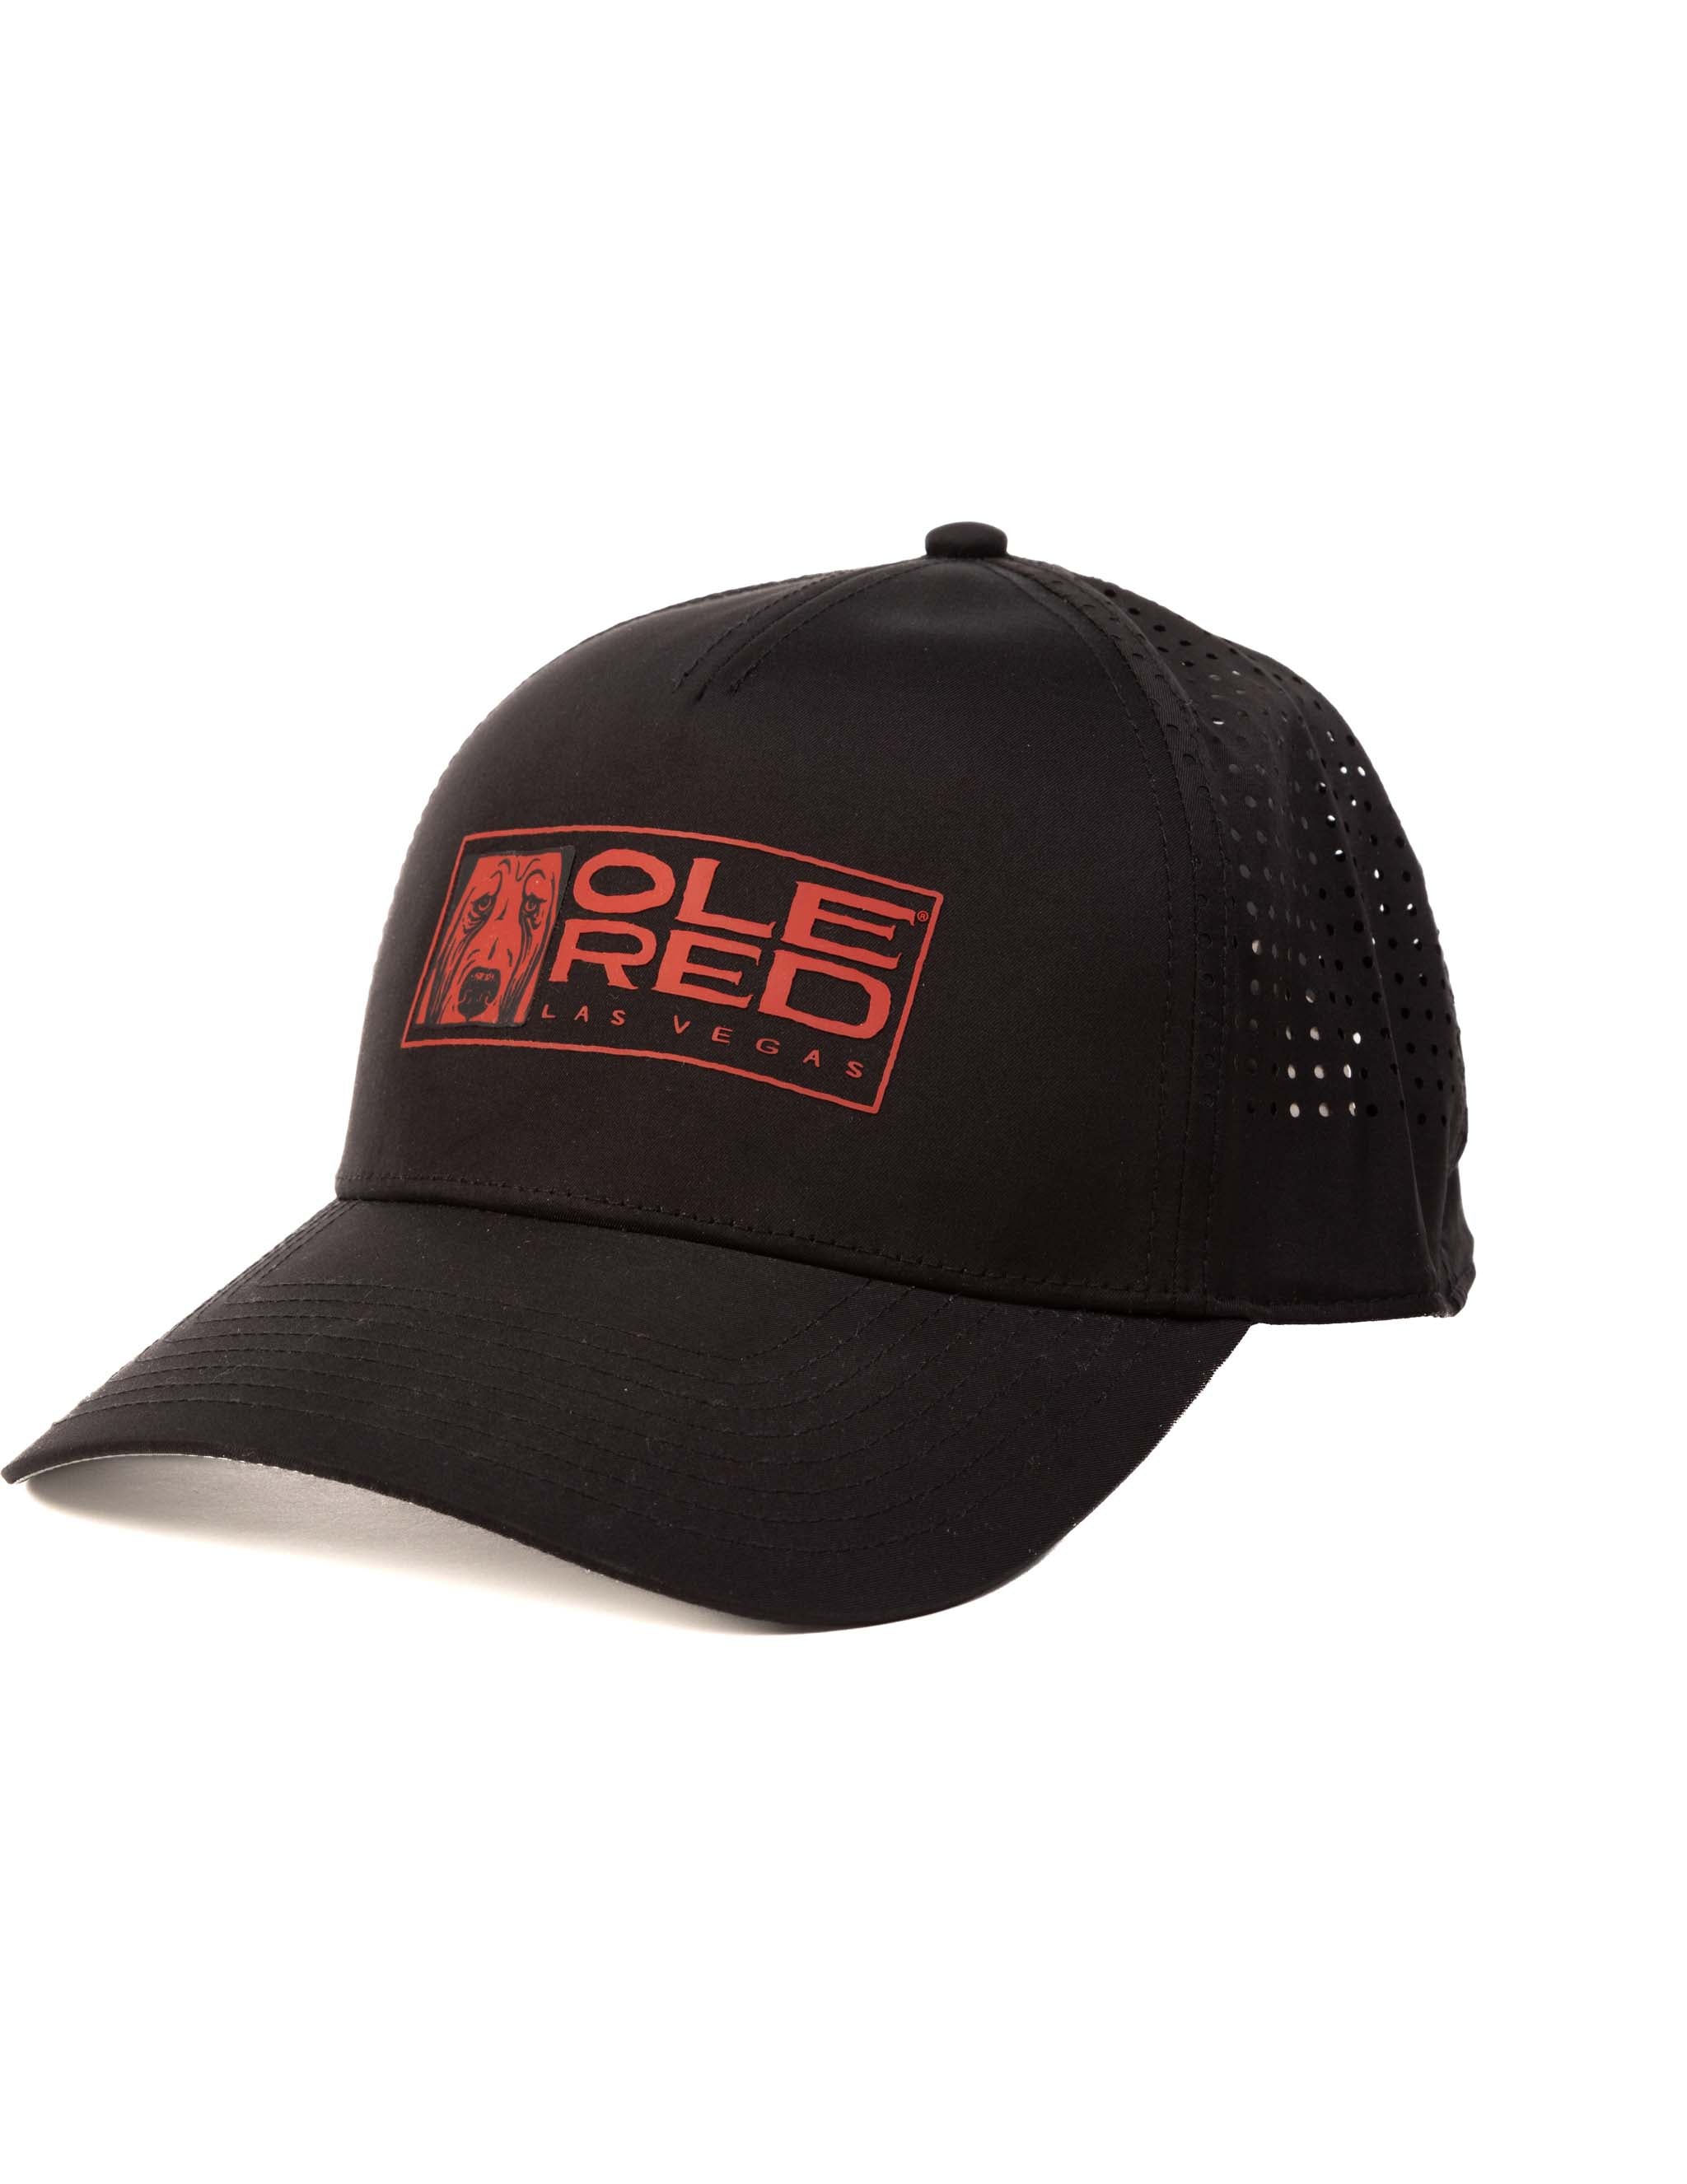 Ole Red Vegas Sport Logo Black Performance Hat